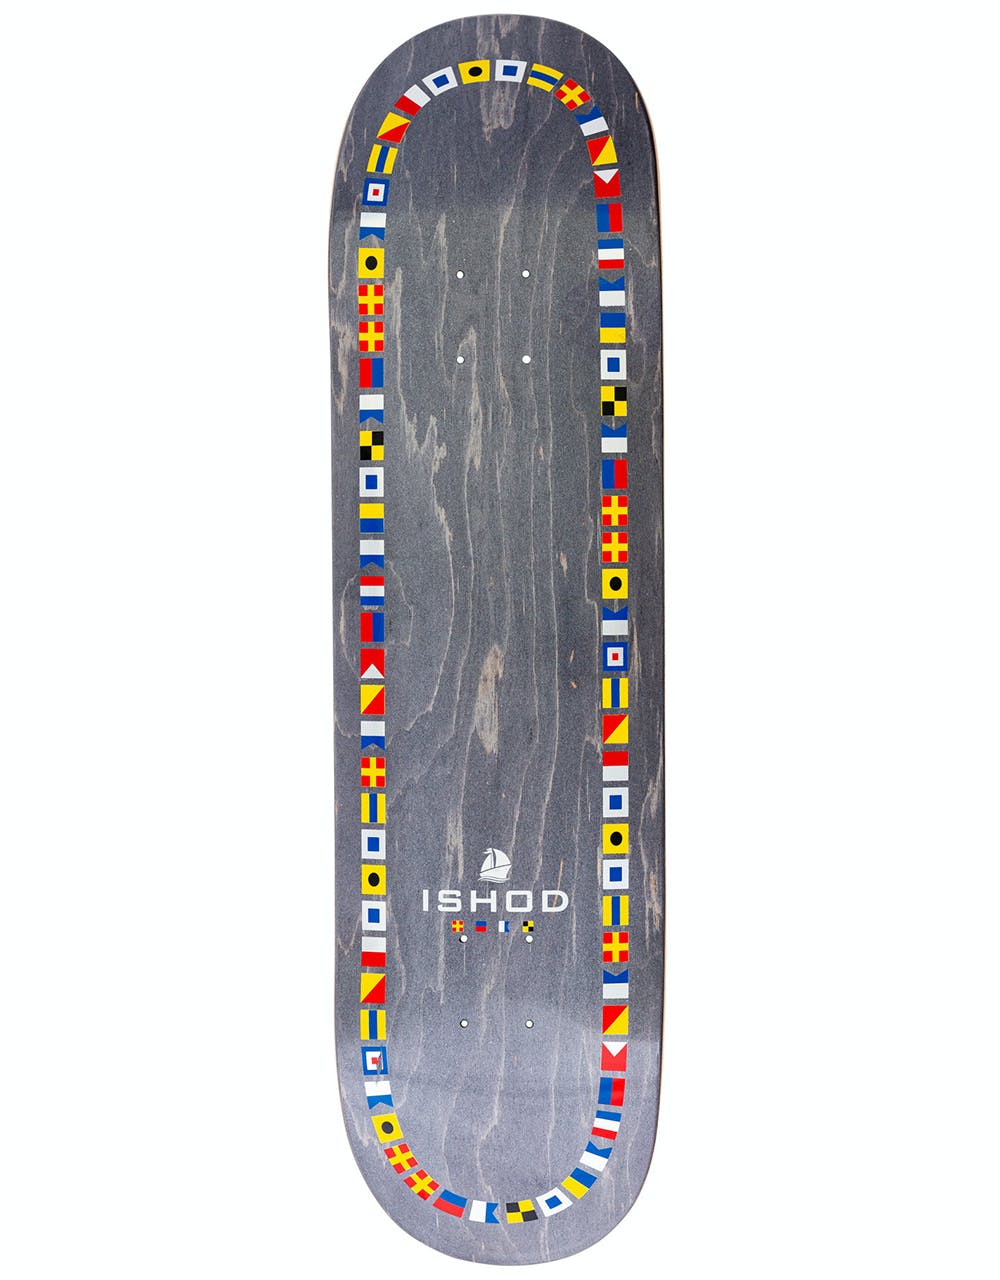 Real Ishod High Seas Skateboard Deck - 8.25"